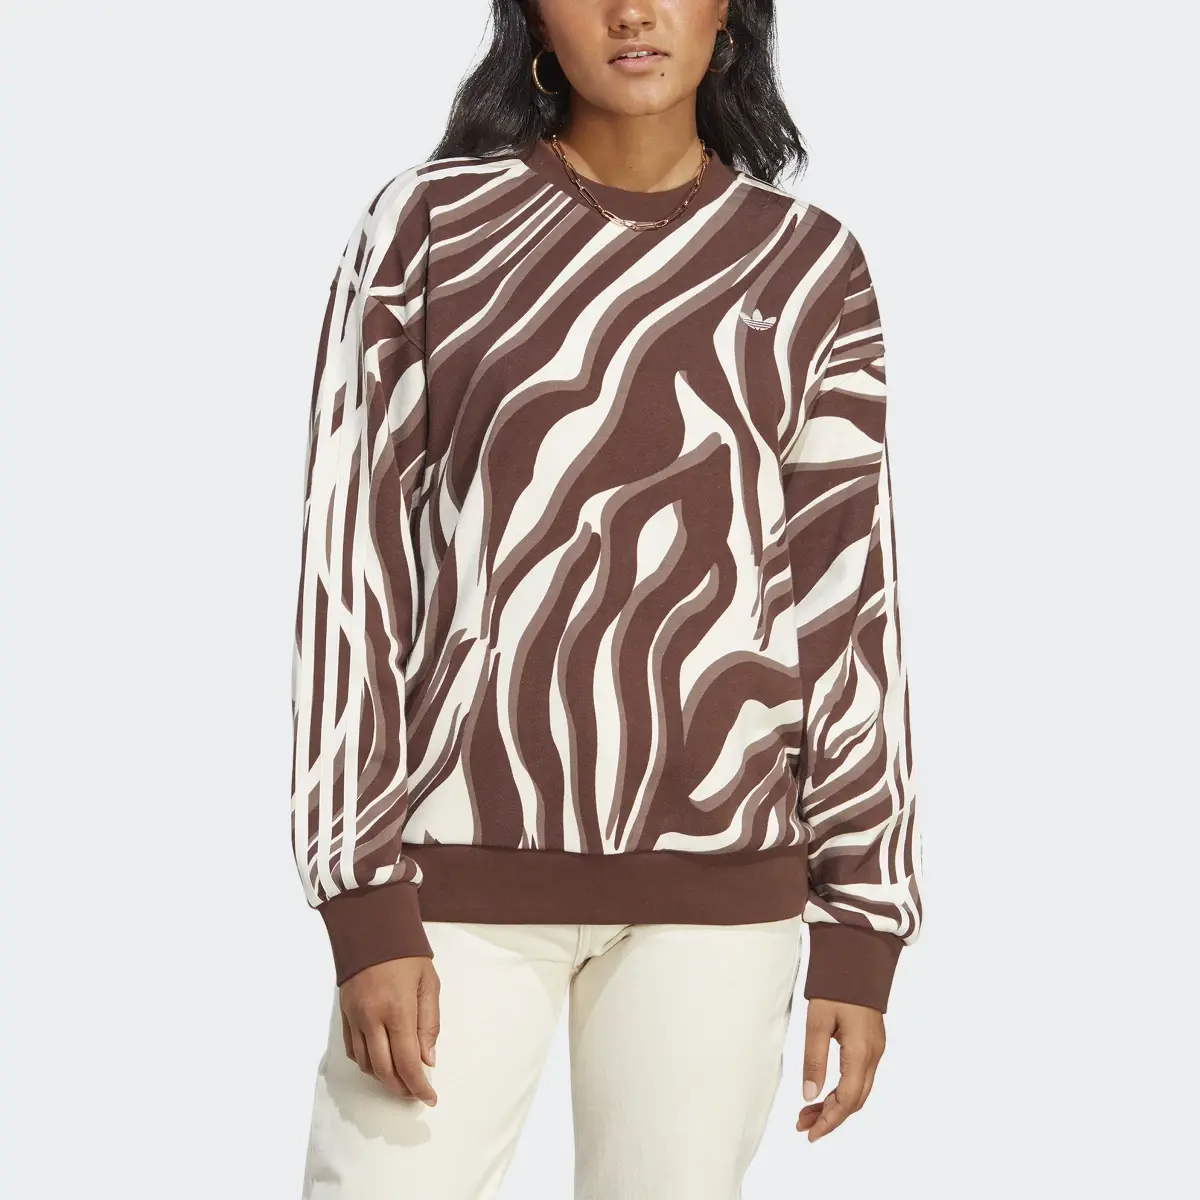 Adidas Abstract Allover Animal Print Sweatshirt. 1